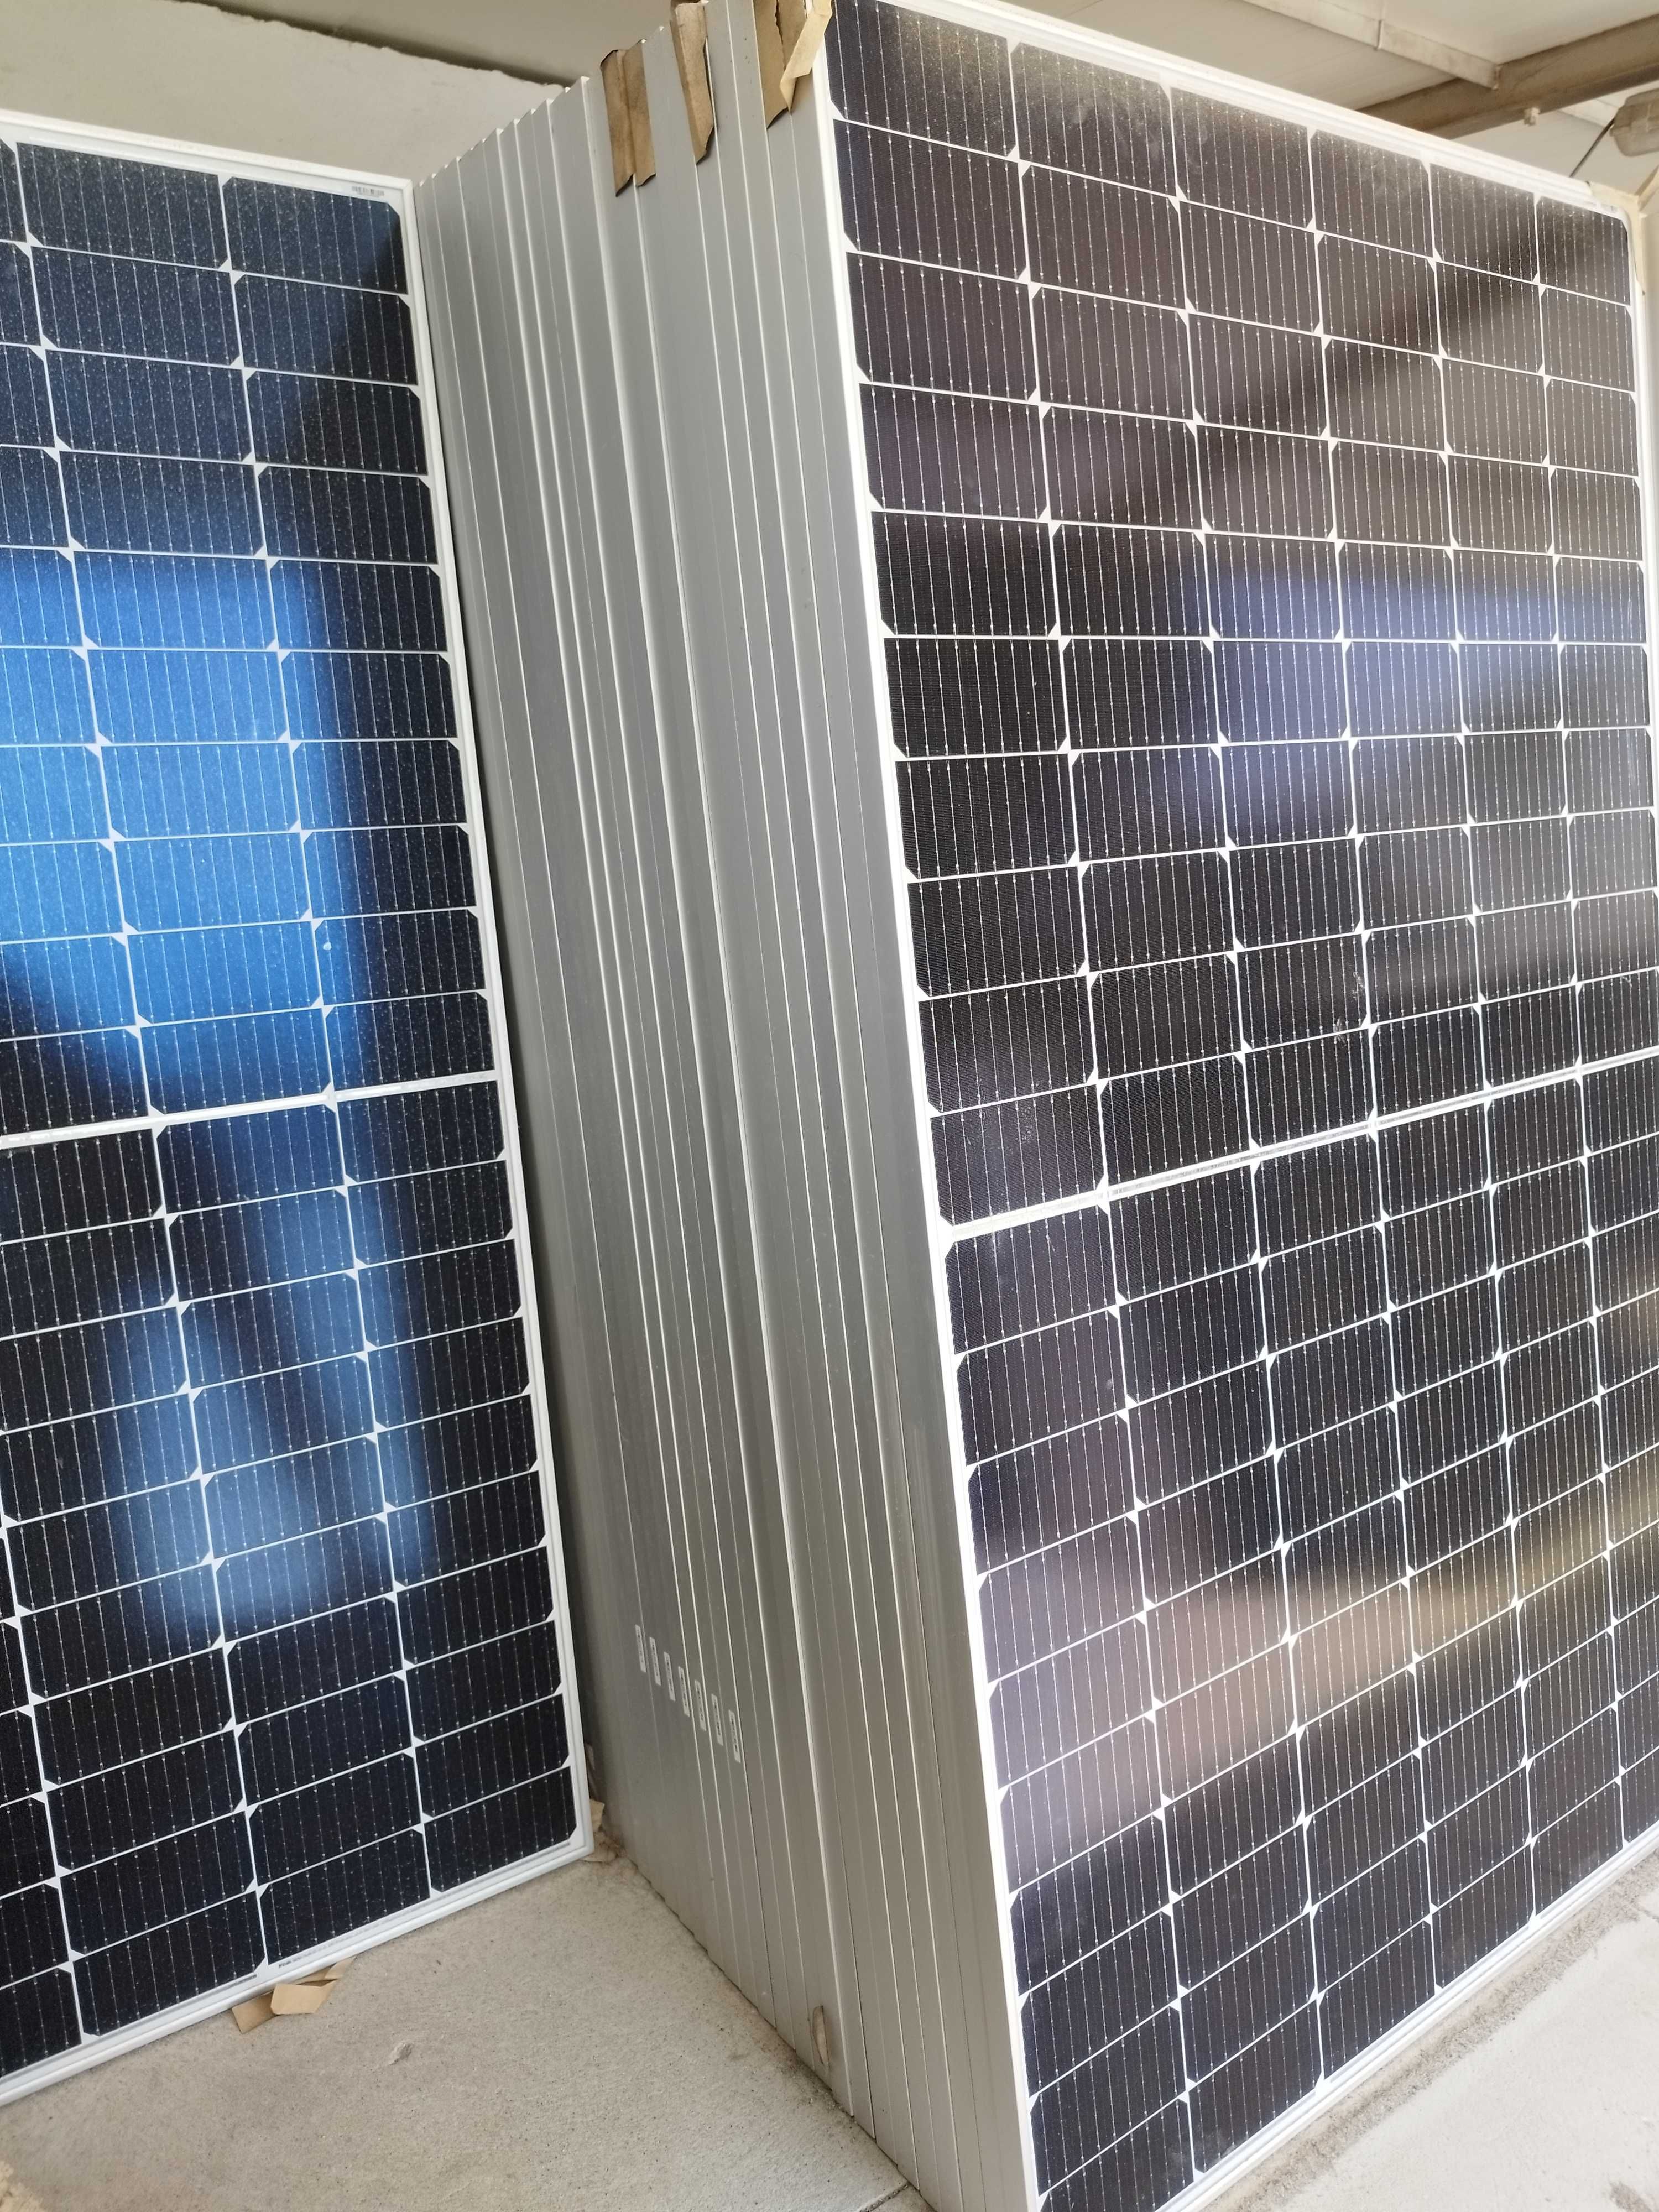 Painel Solar Fotovoltaico = 60€ a unidade